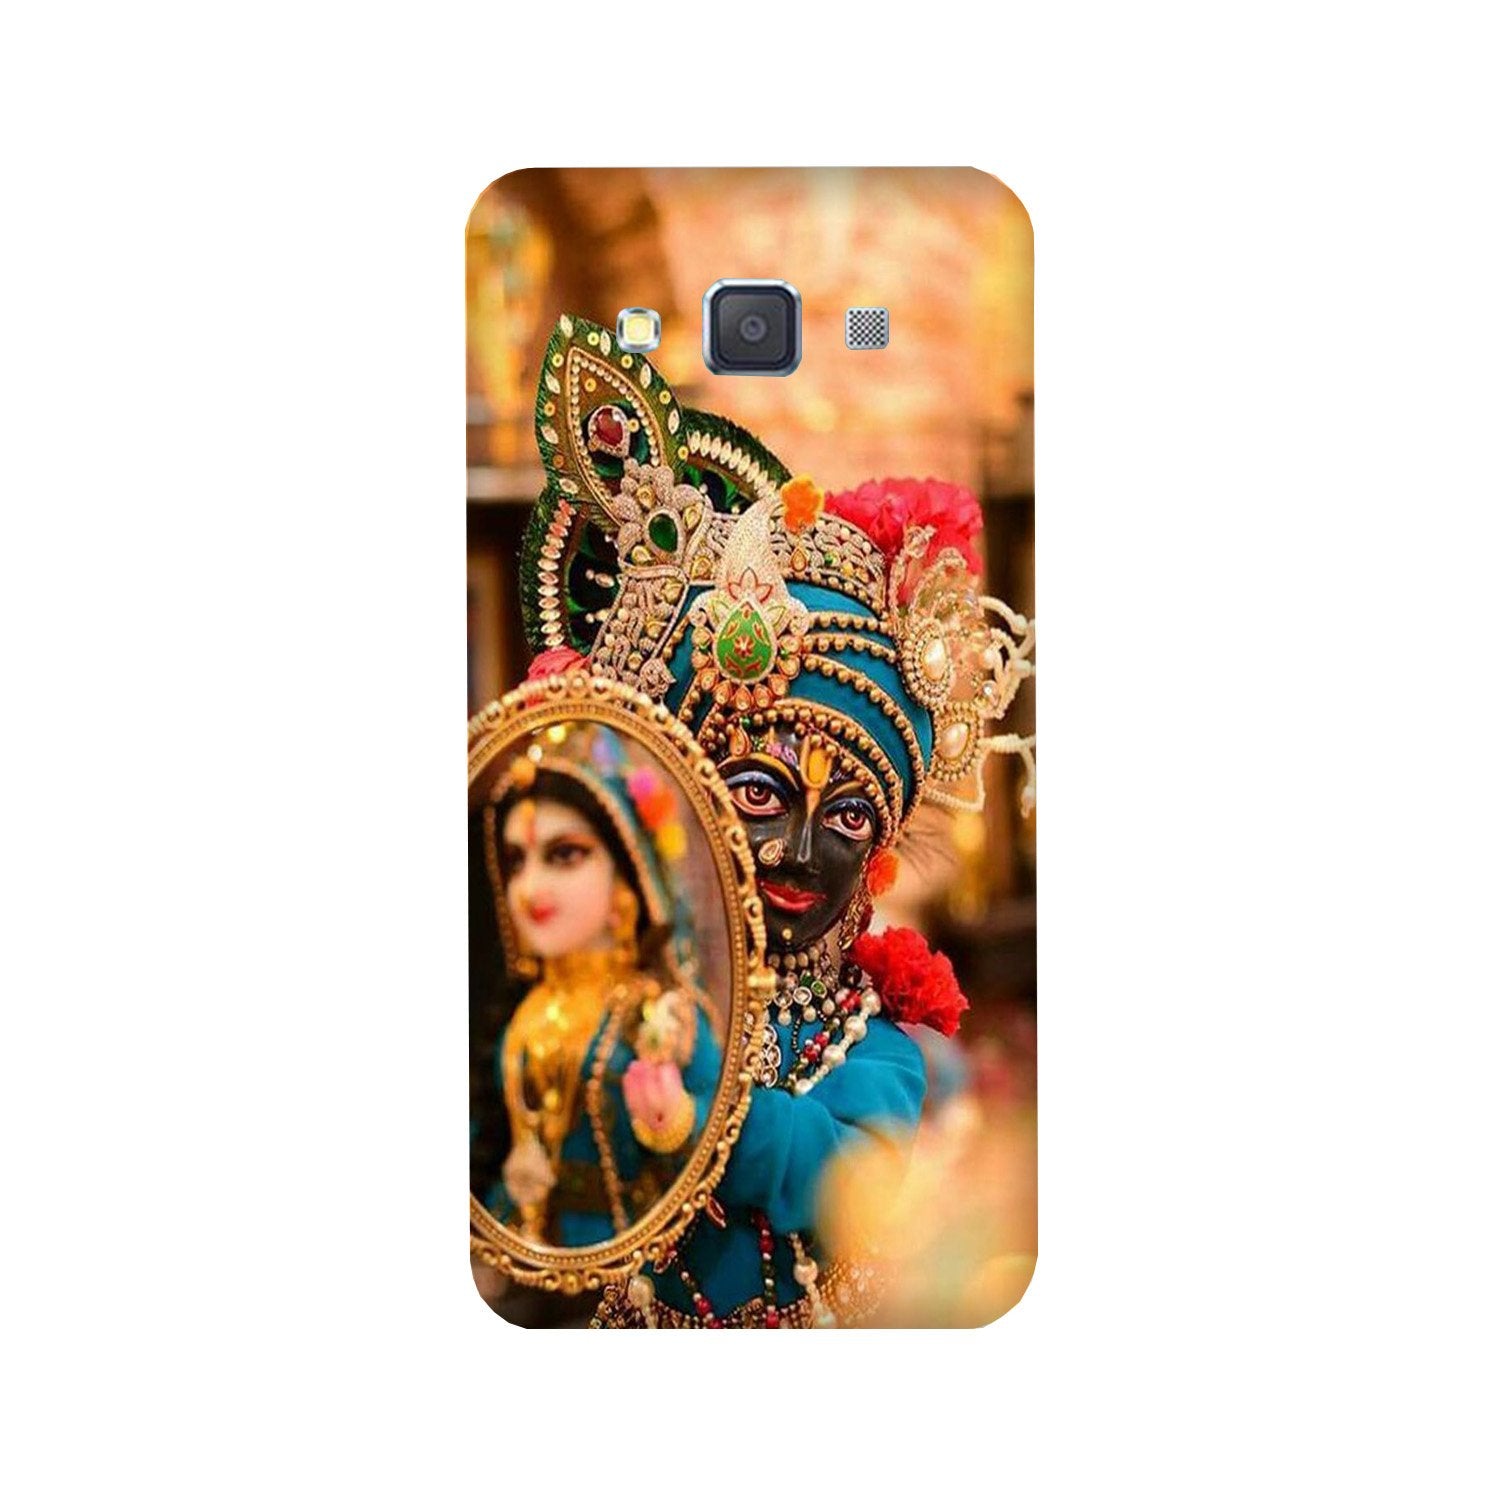 Lord Krishna5 Case for Galaxy A3 (2015)